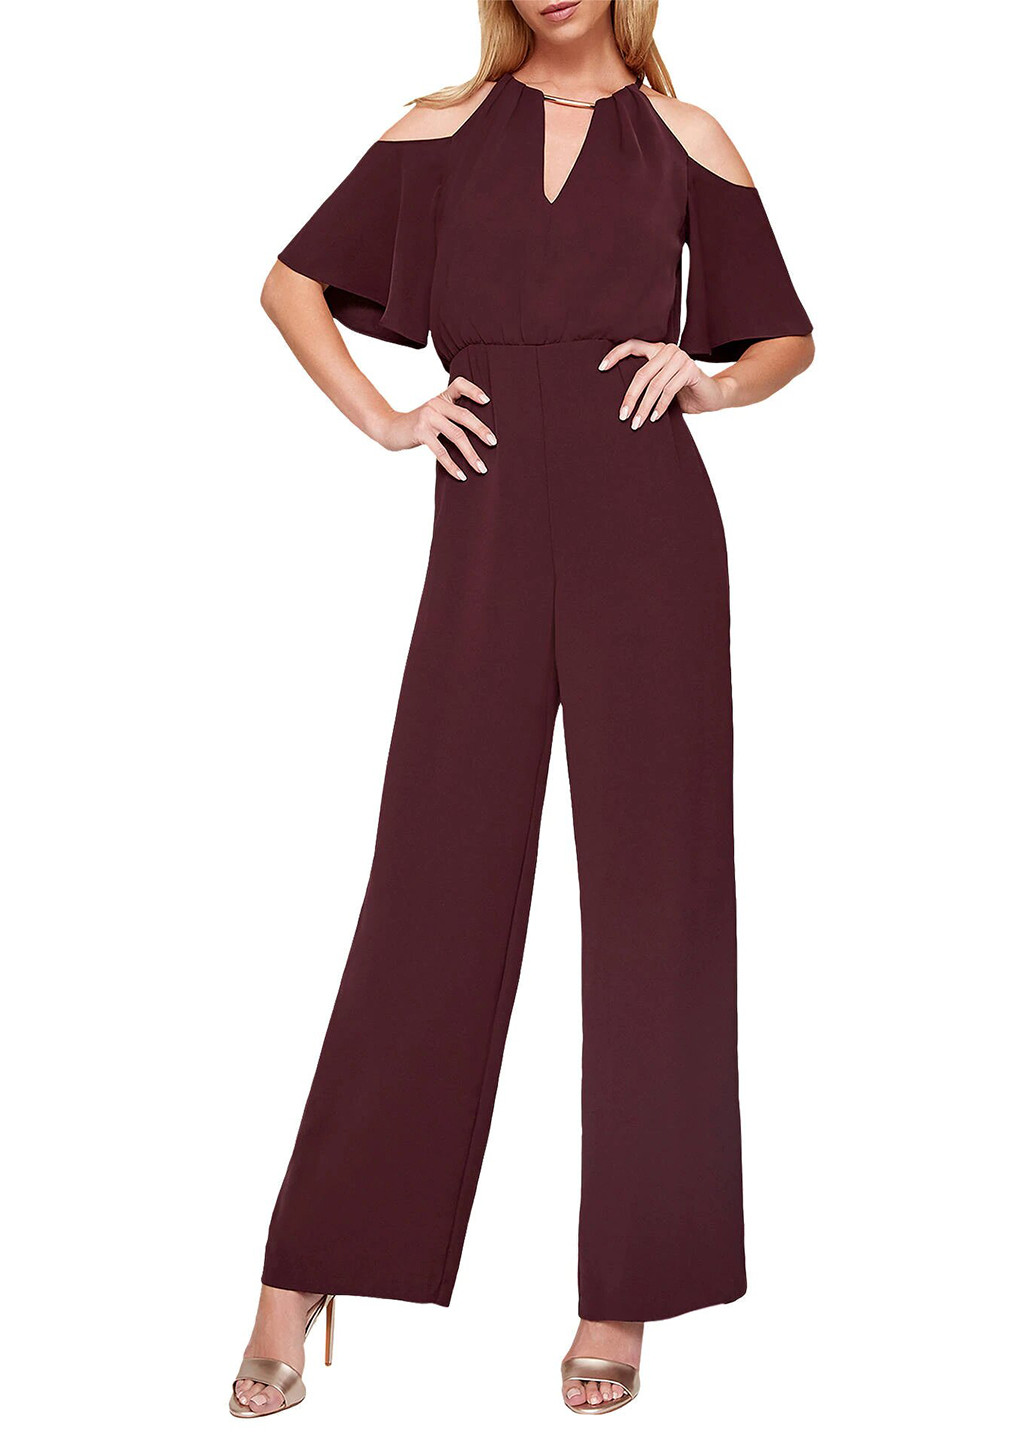 Комбинезон Damsel in a Dress комбинезон-брюки однотонный бордовый кэжуал полиэстер